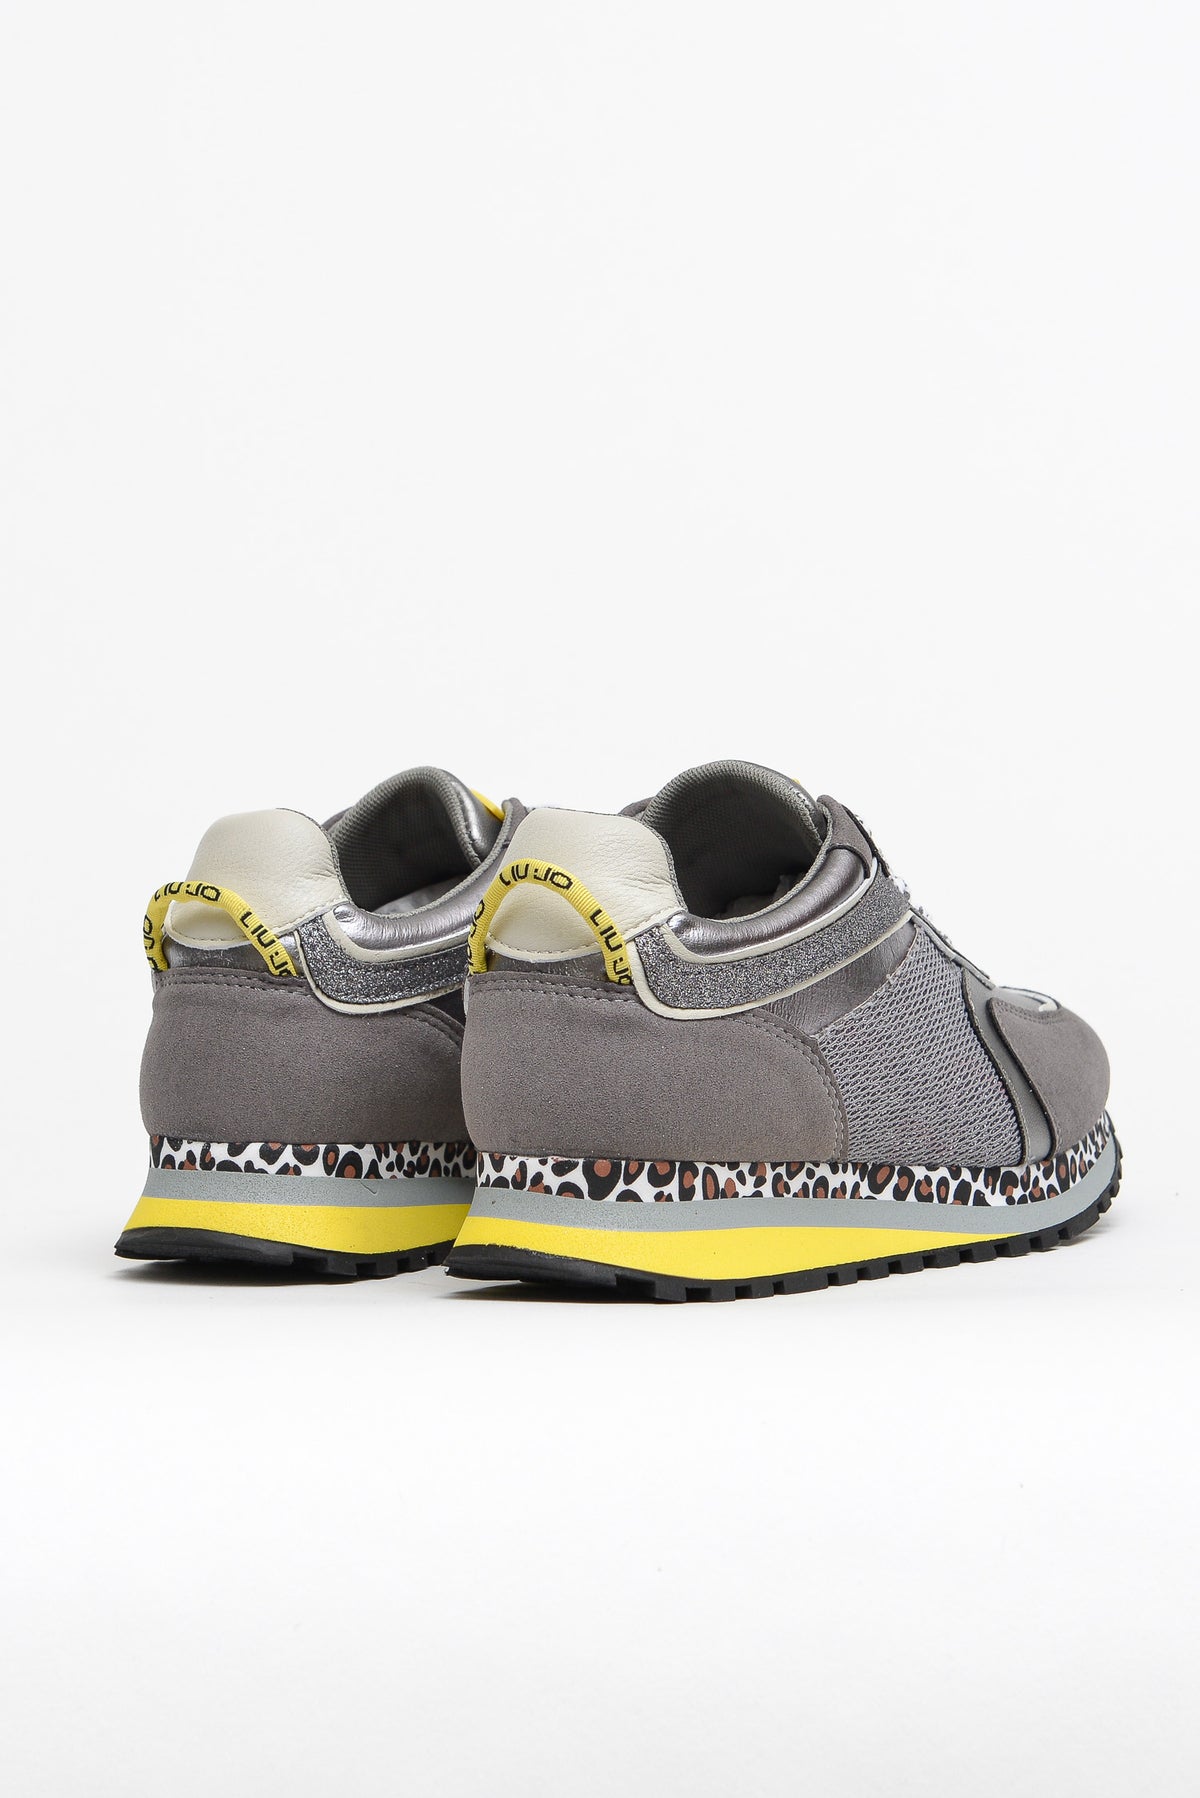 Liu Jo Shoes Sneakers Lacci Grigio Bambina - 5